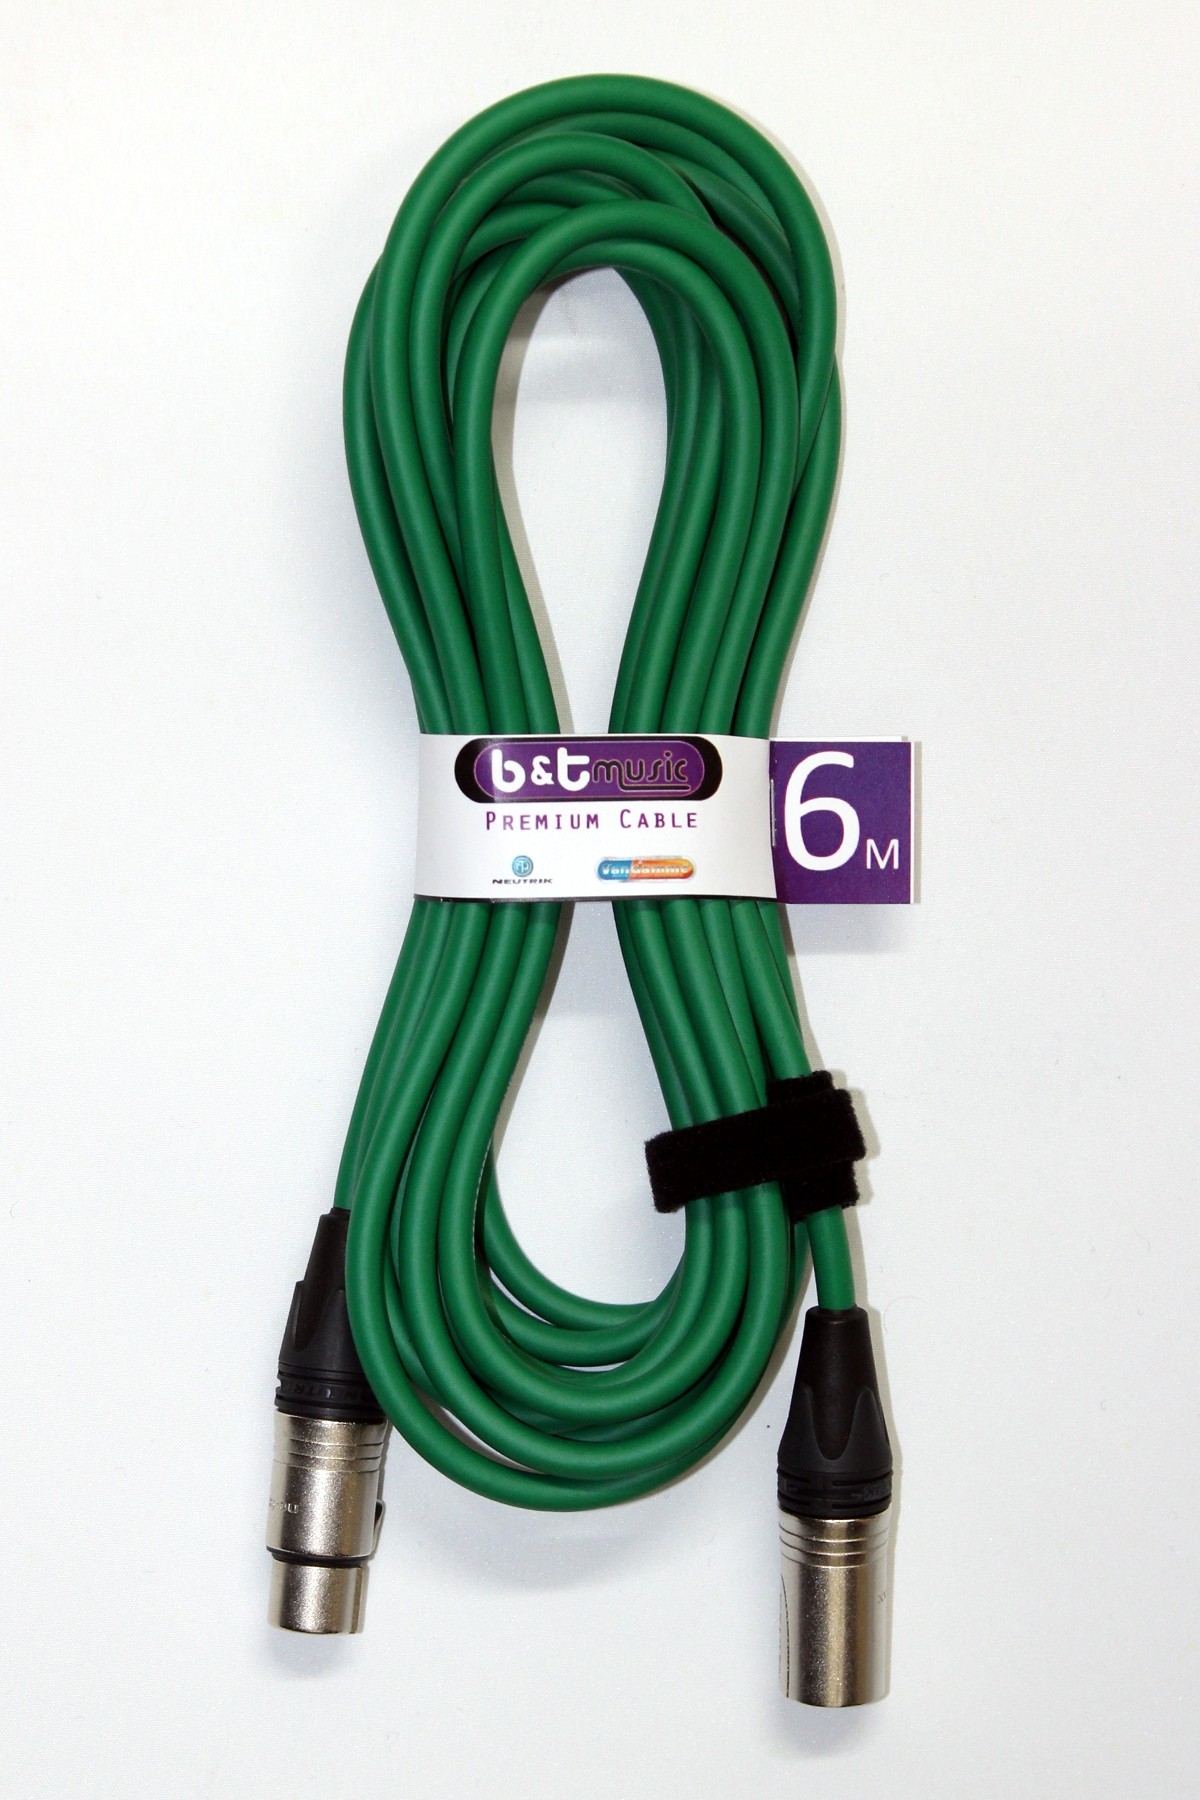 B&T Music Premium Cable 6m XLR To XLR - Green